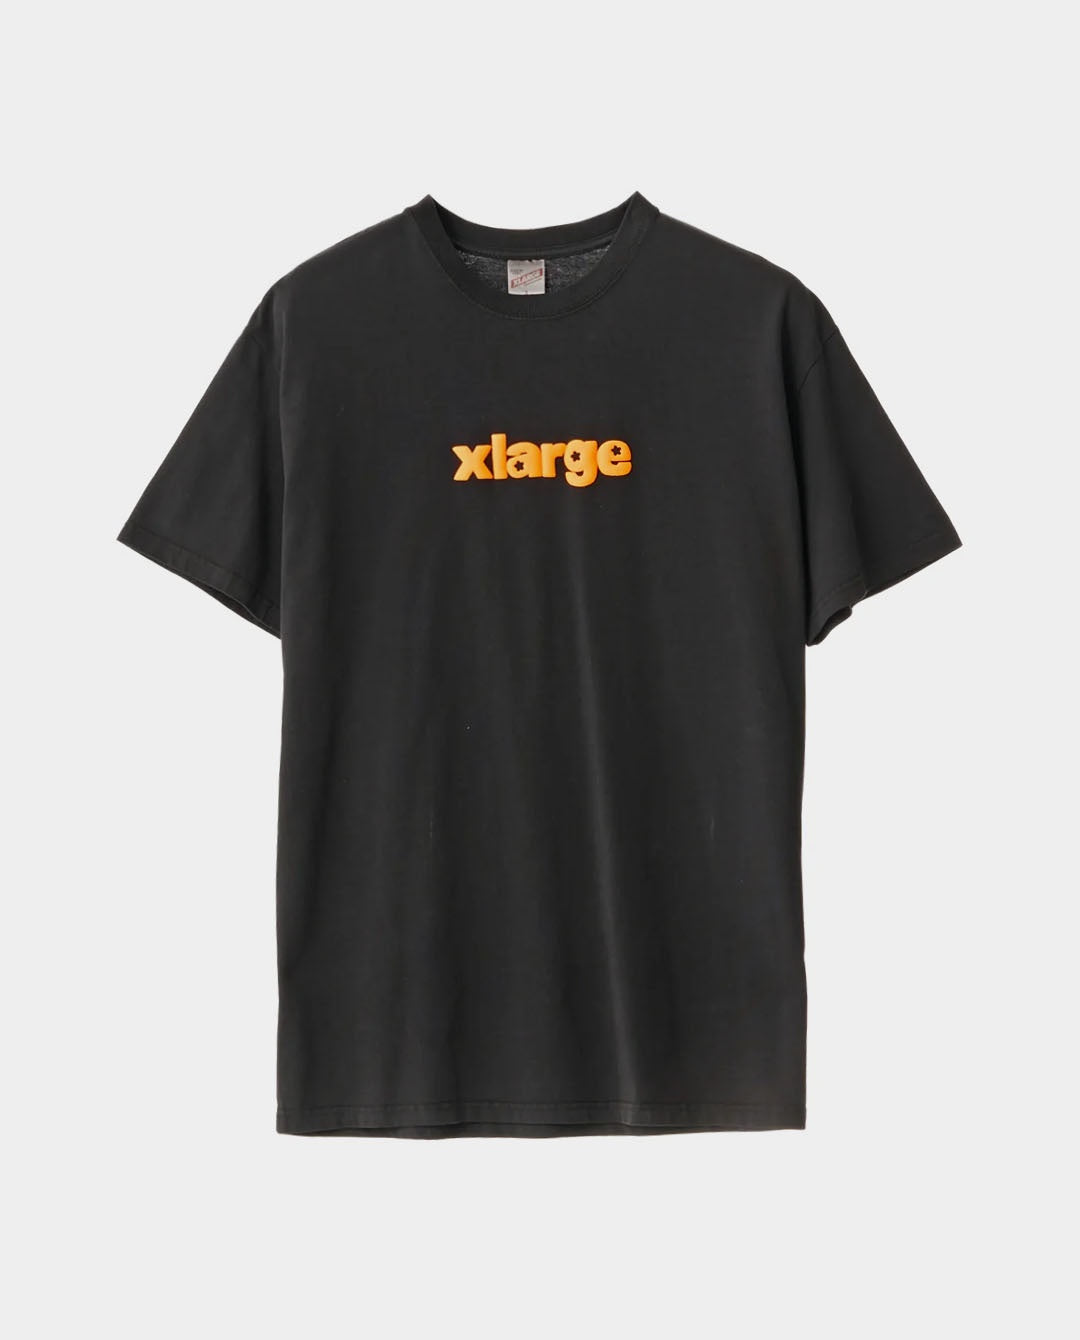 XLarge - Grow Together T-Shirt - Black